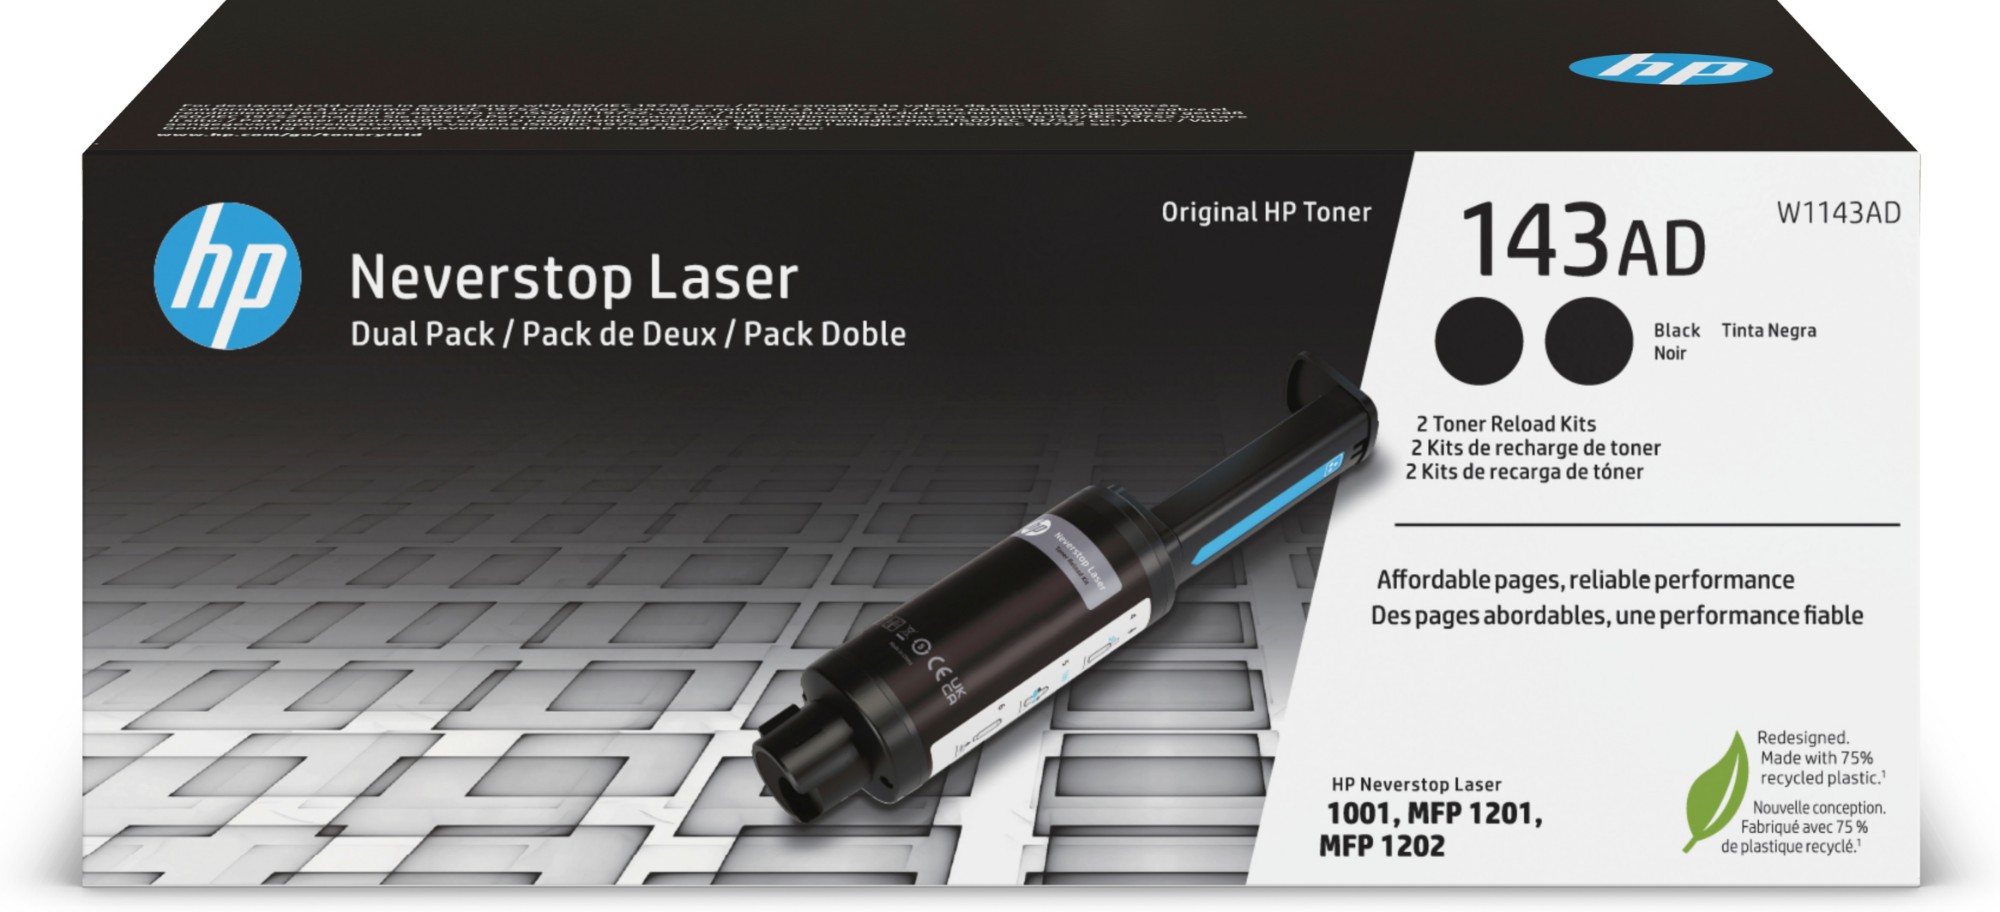 HP 143AD Original Neverstop Laser Toner Reload Kit Dual Pk Blk W1143AD